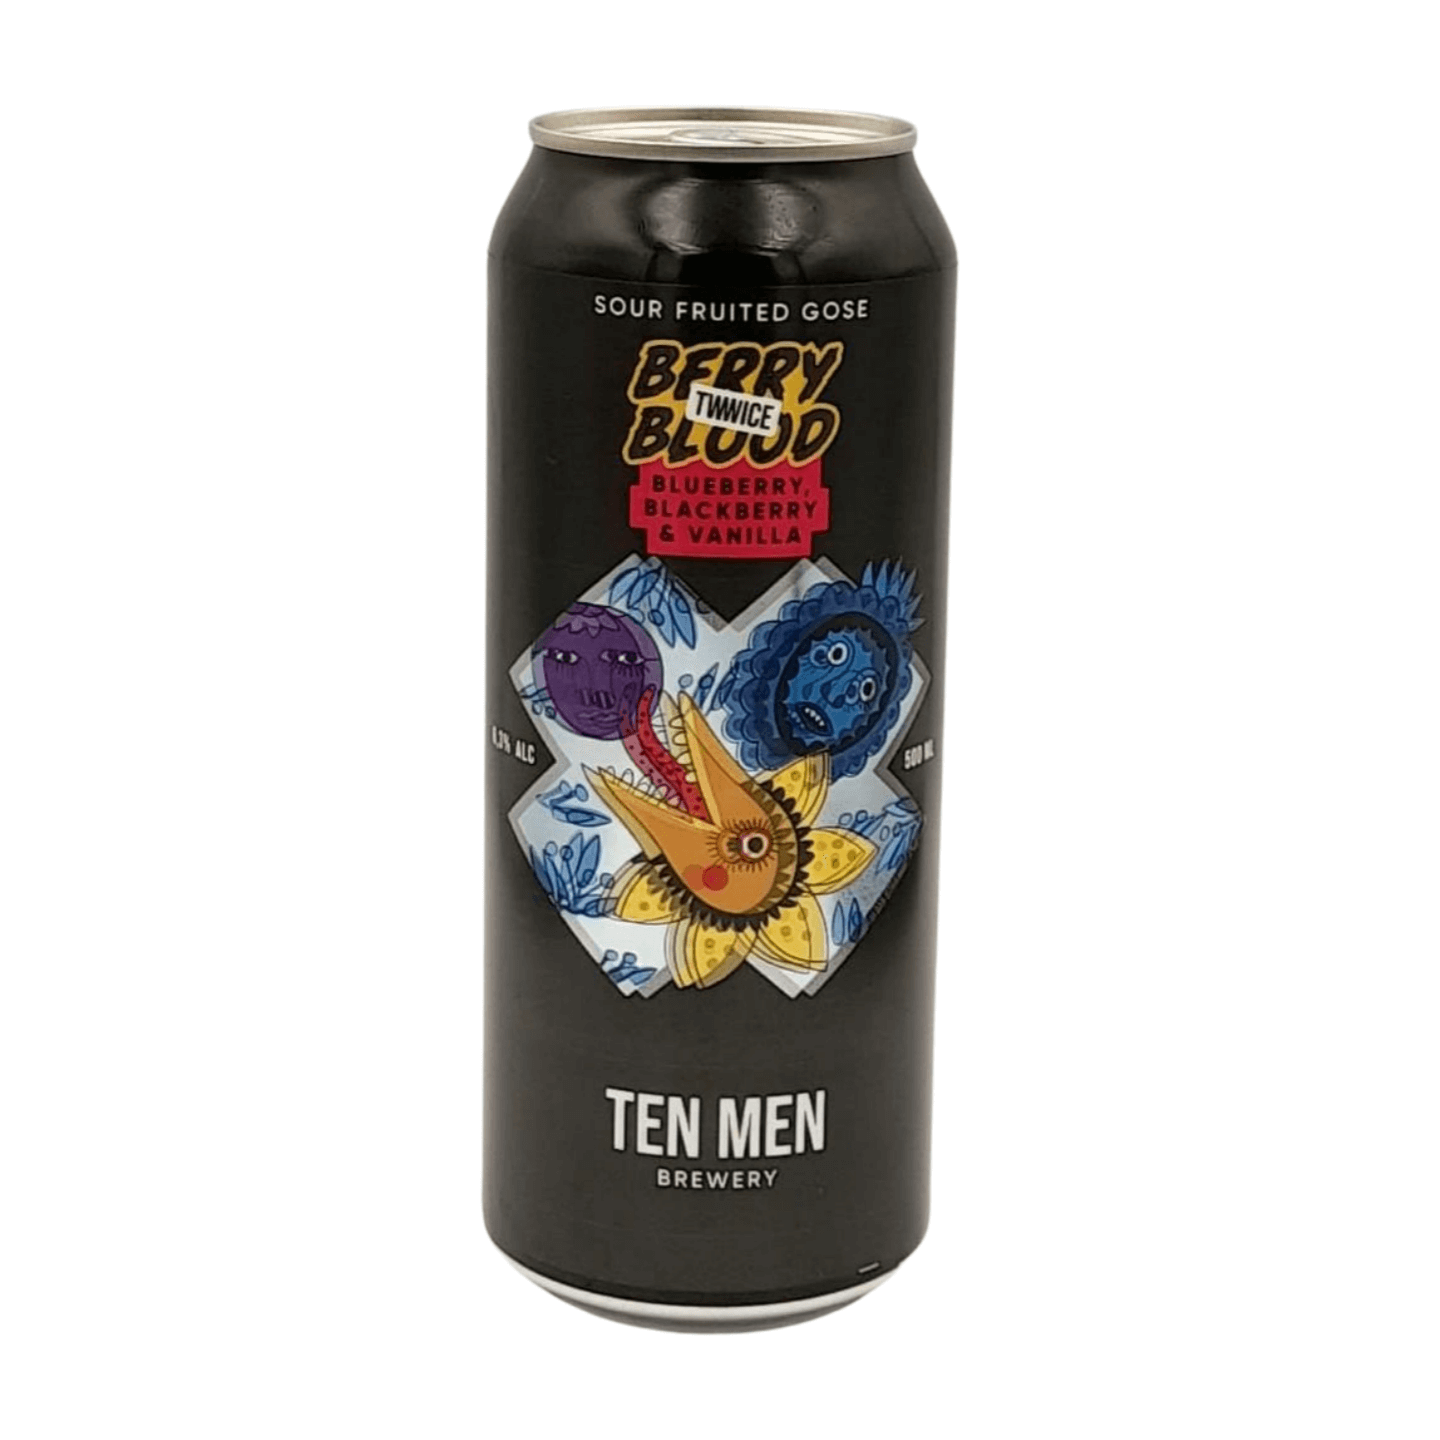 Ten Men Brewery Twice Berry Blood: Blueberry, Blackberry & Vanilla | Fruited Gose Webshop Online Verdins Bierwinkel Rotterdam